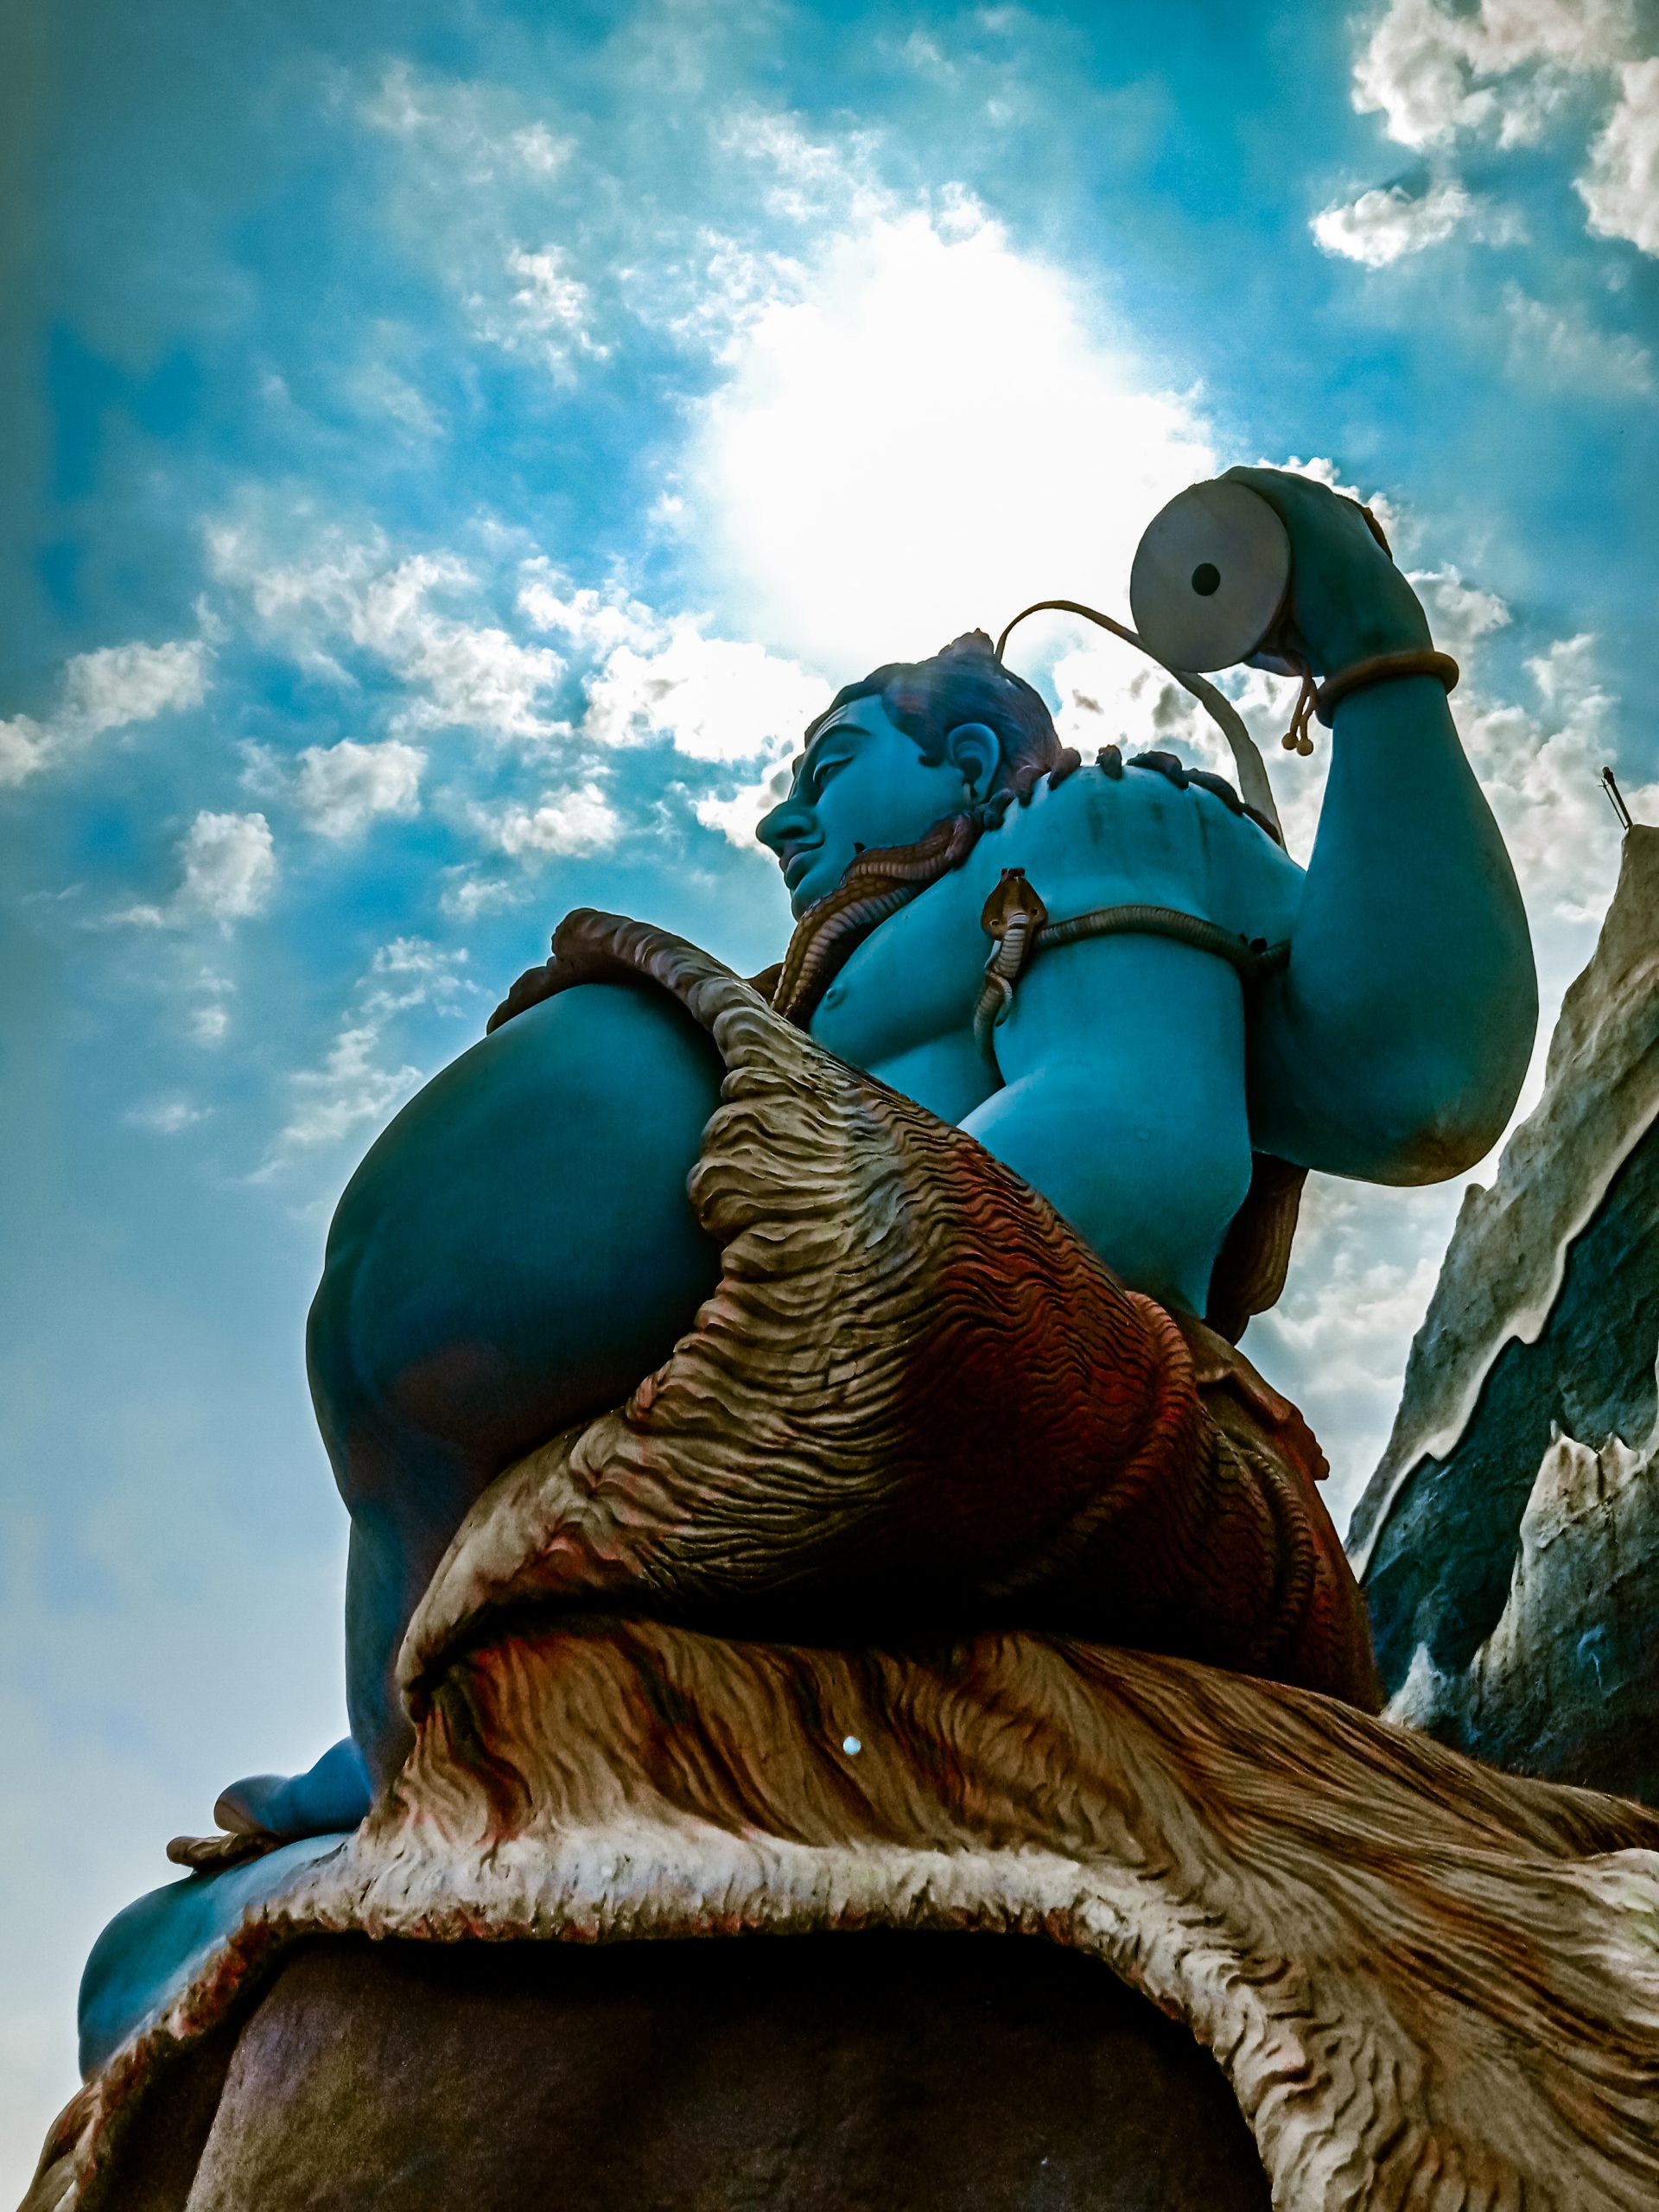 Huge statue of Lord Shiva